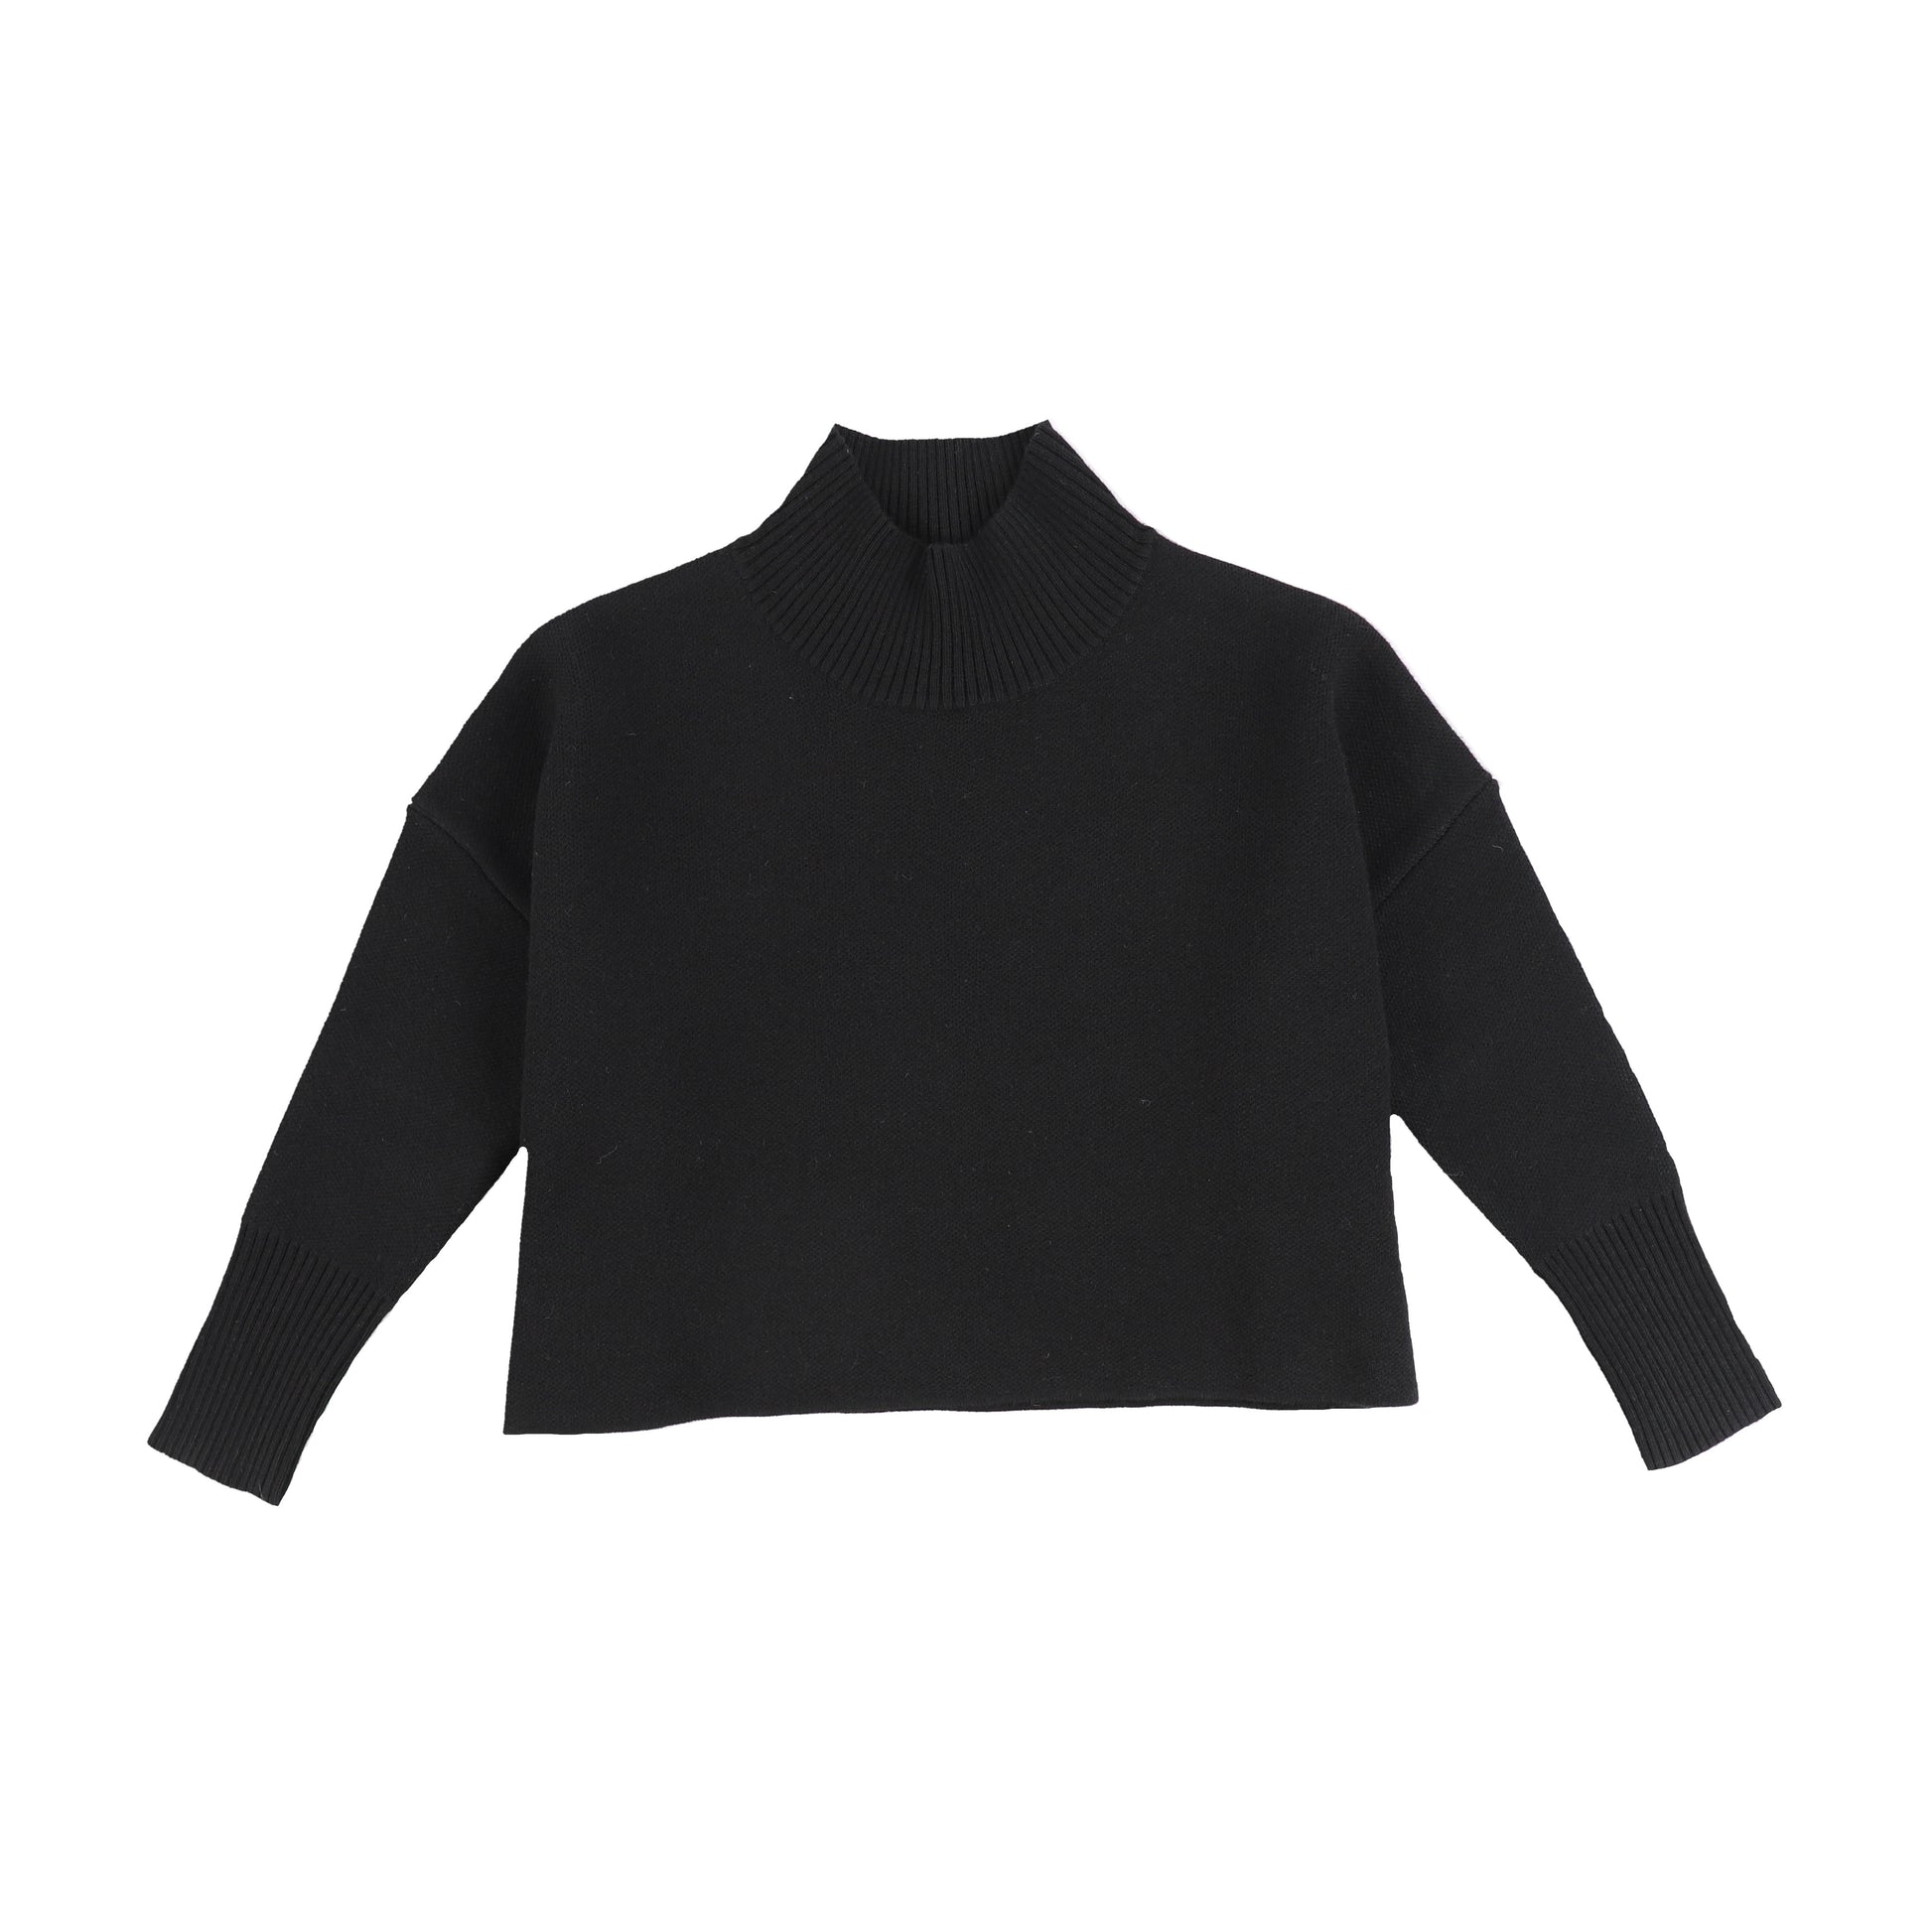 Cropped Turtleneck Sweater - Black - Ladies